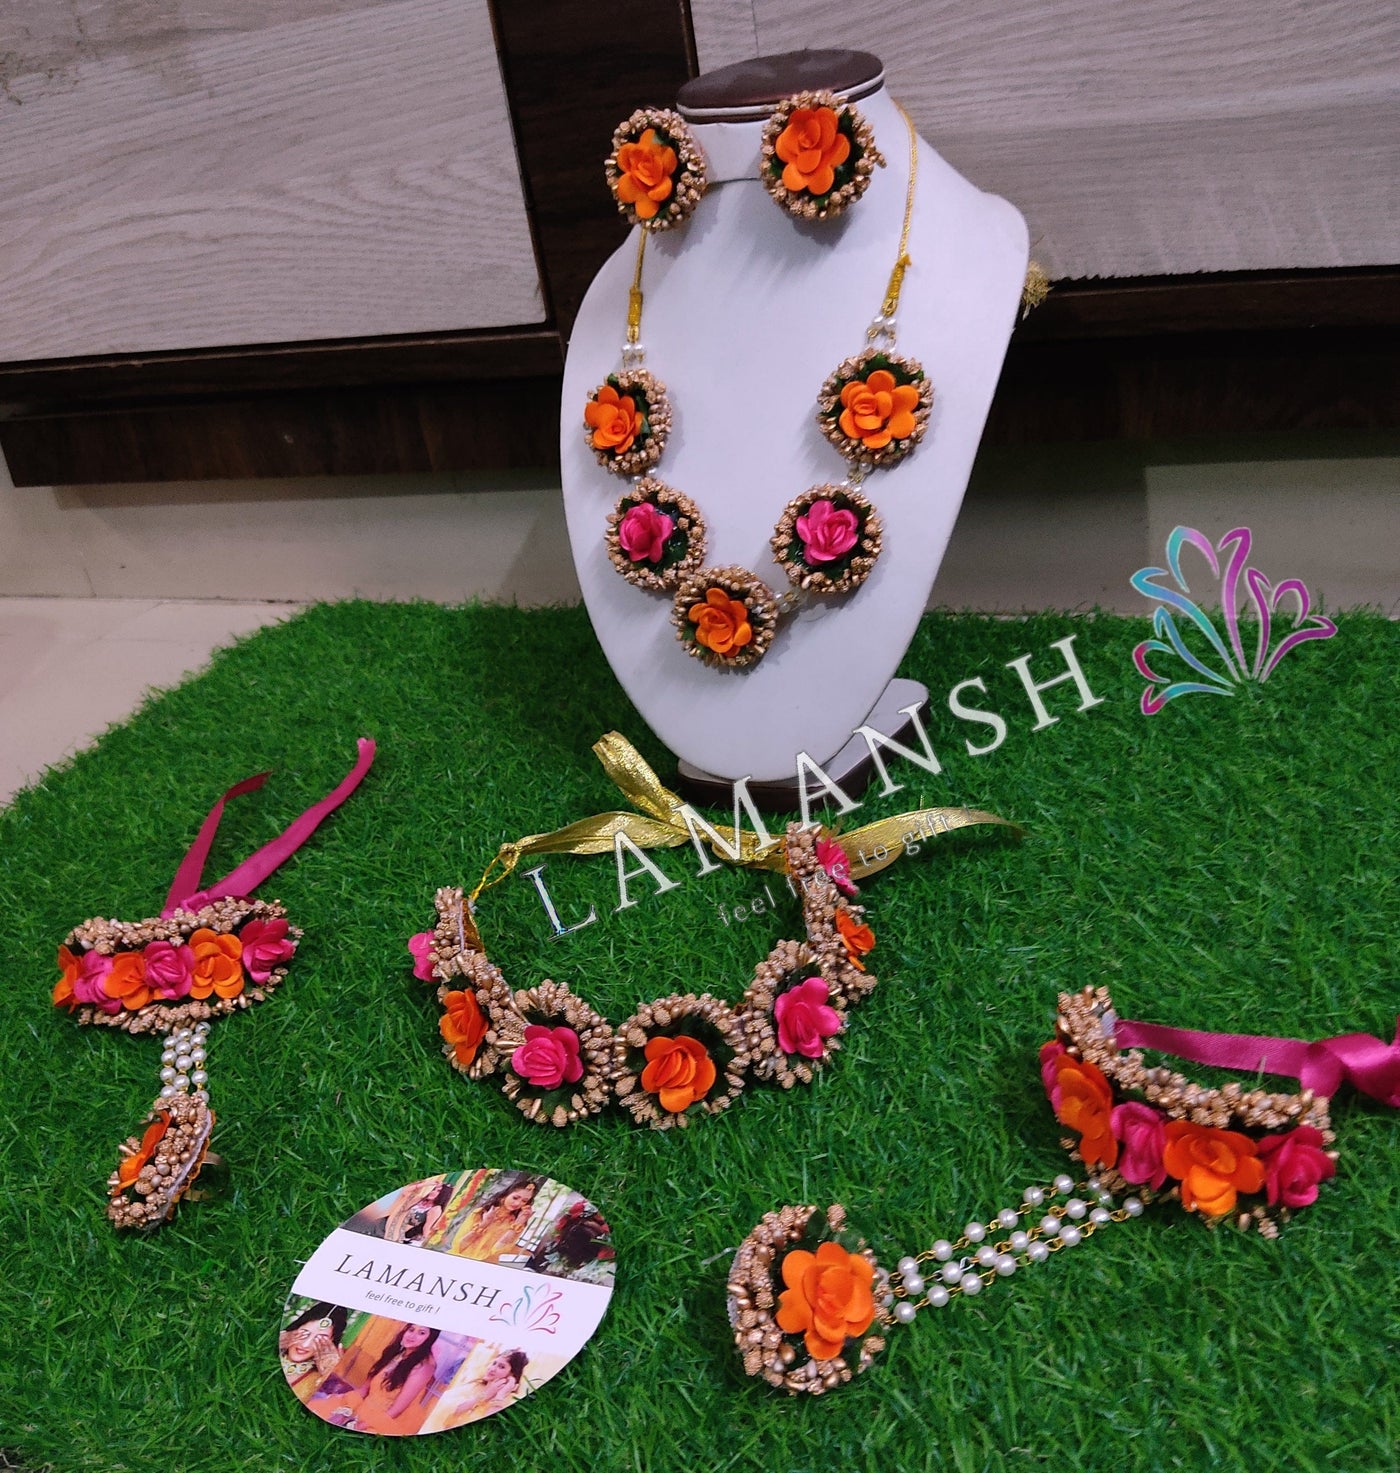 LAMANSH Flower Jewellery Pink Orange Golden LAMANSH® Artificial Floral Jewellery Set 🌺 with Tiara / Flower Jewelry set for Bride in Haldi or Mehendi ceremony